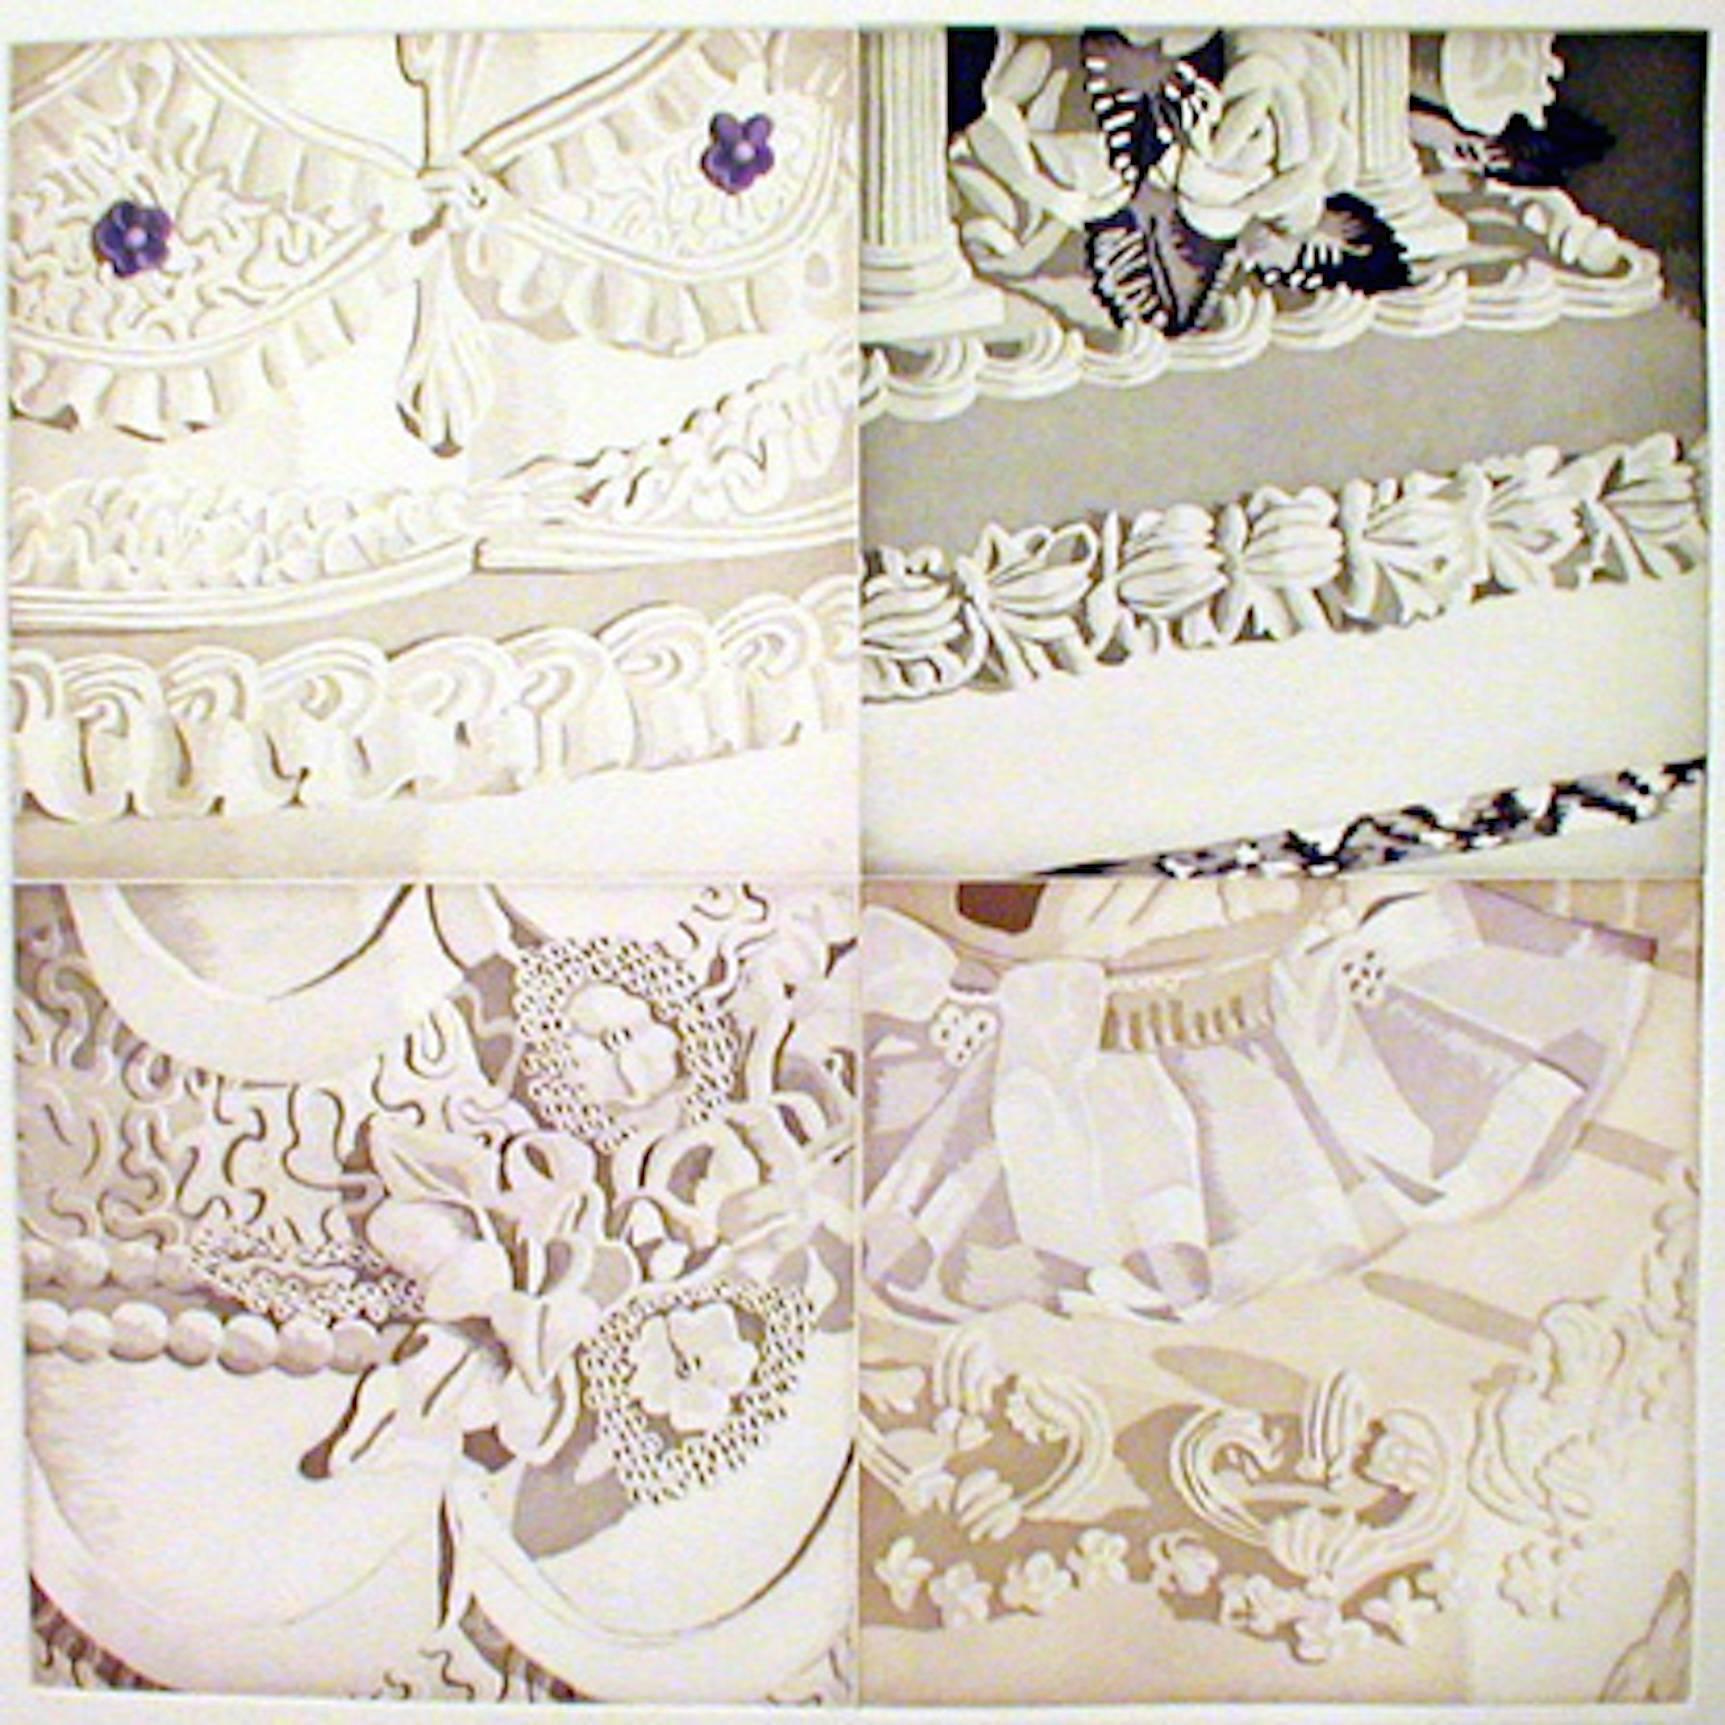 White on White (Four Sections of Wedding Cake)